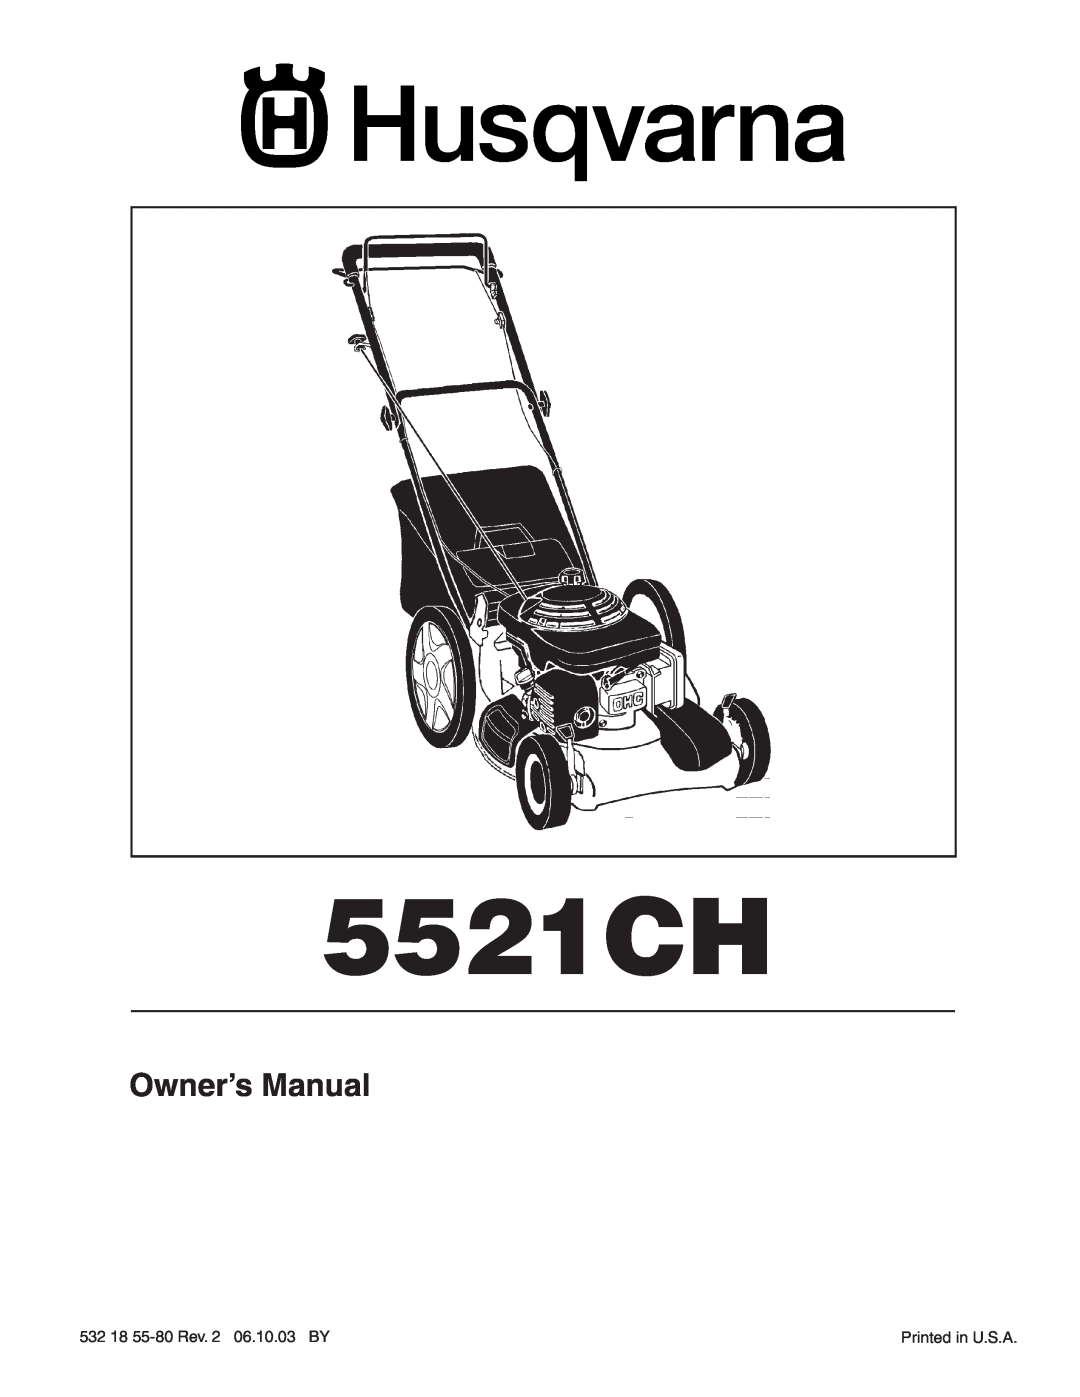 Husqvarna 5521CH owner manual Owner’s Manual, 532 18 55-80 Rev. 2 06.10.03 BY, Printed in U.S.A 